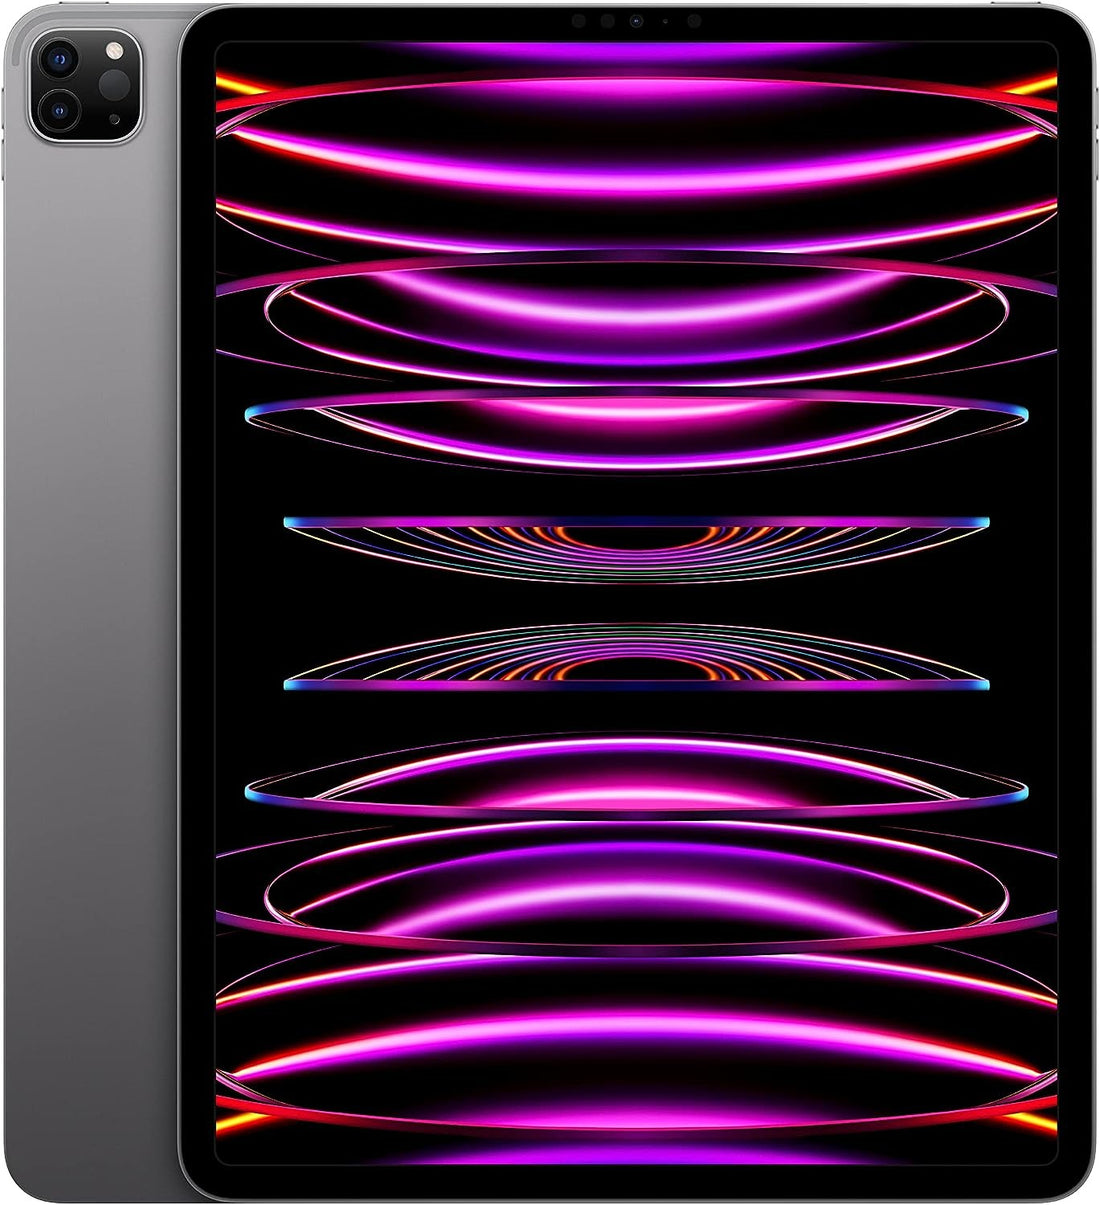 Apple iPad Pro 6th Gen 11in - 128GB (Wifi + Cellular) (Unlocked) - Space Gray (Refurbished)